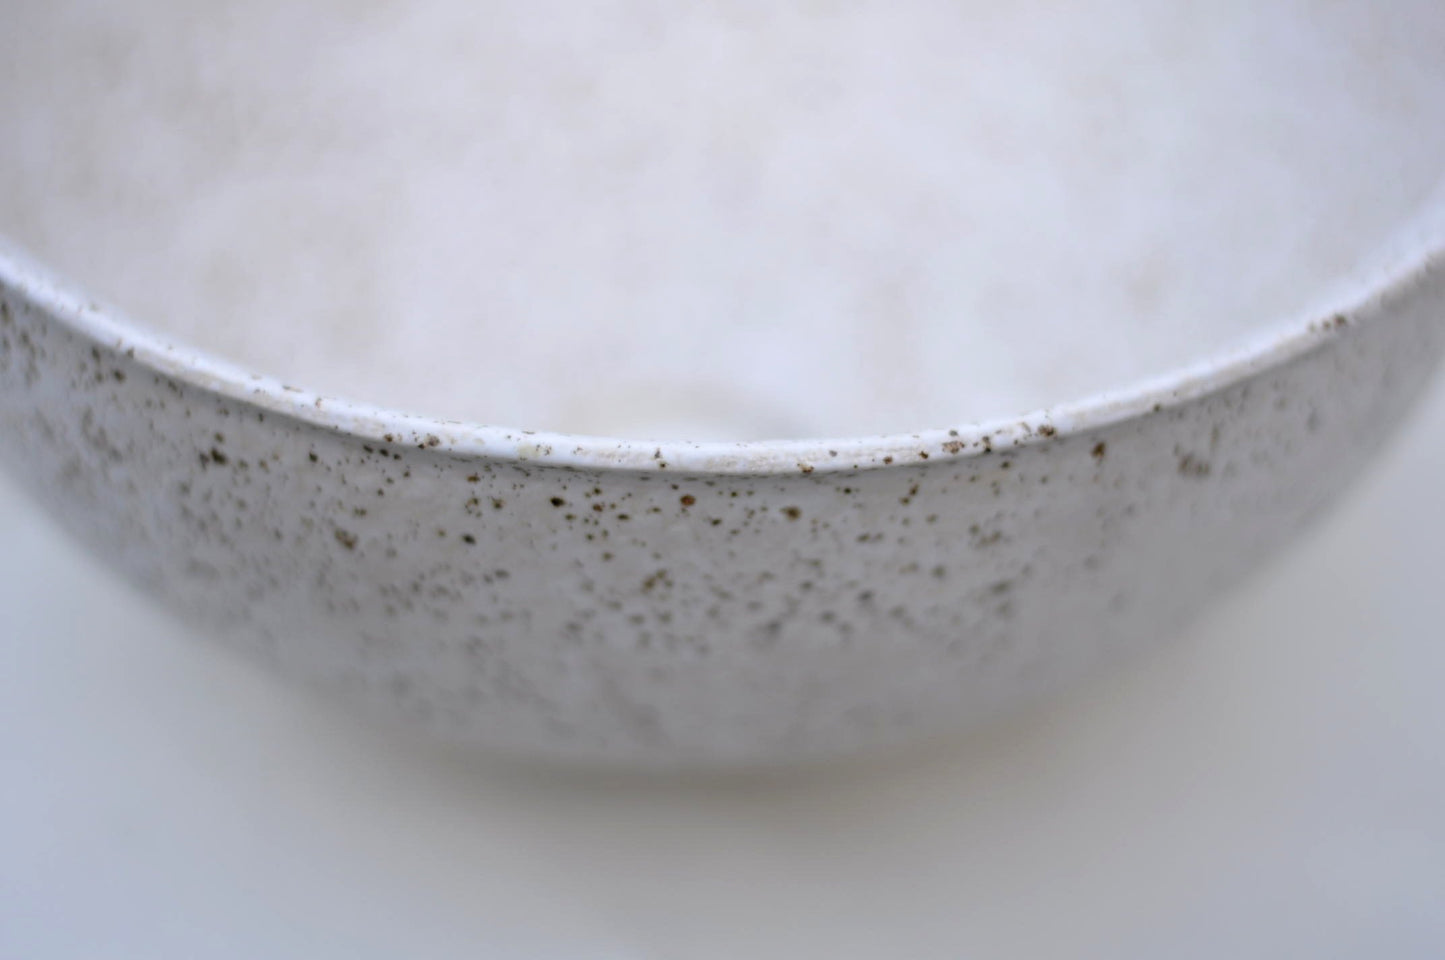 Handgefertigtes Keramikwaschbecken - Aquamarin